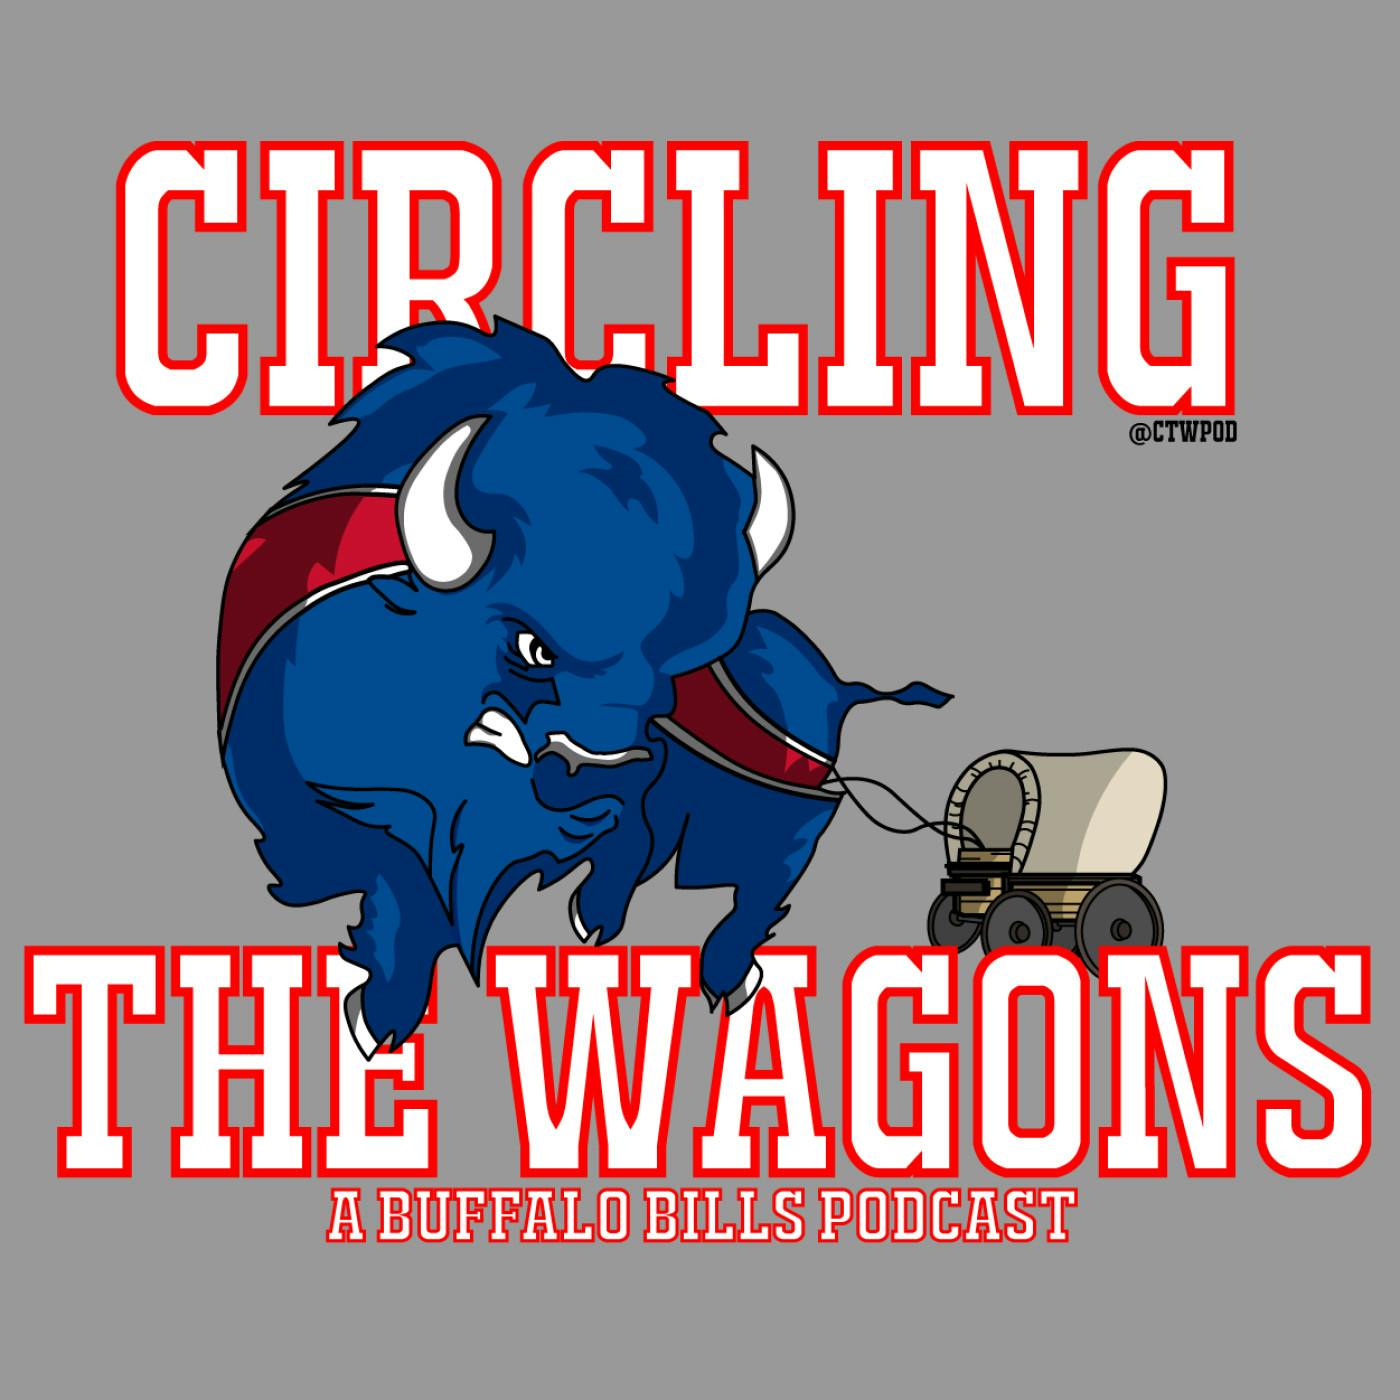 Circling the Wagons: 2019 Bills Offseason Needs & New Stadium Talk w/ Ryan Talbot of NewYorkUsptate.com